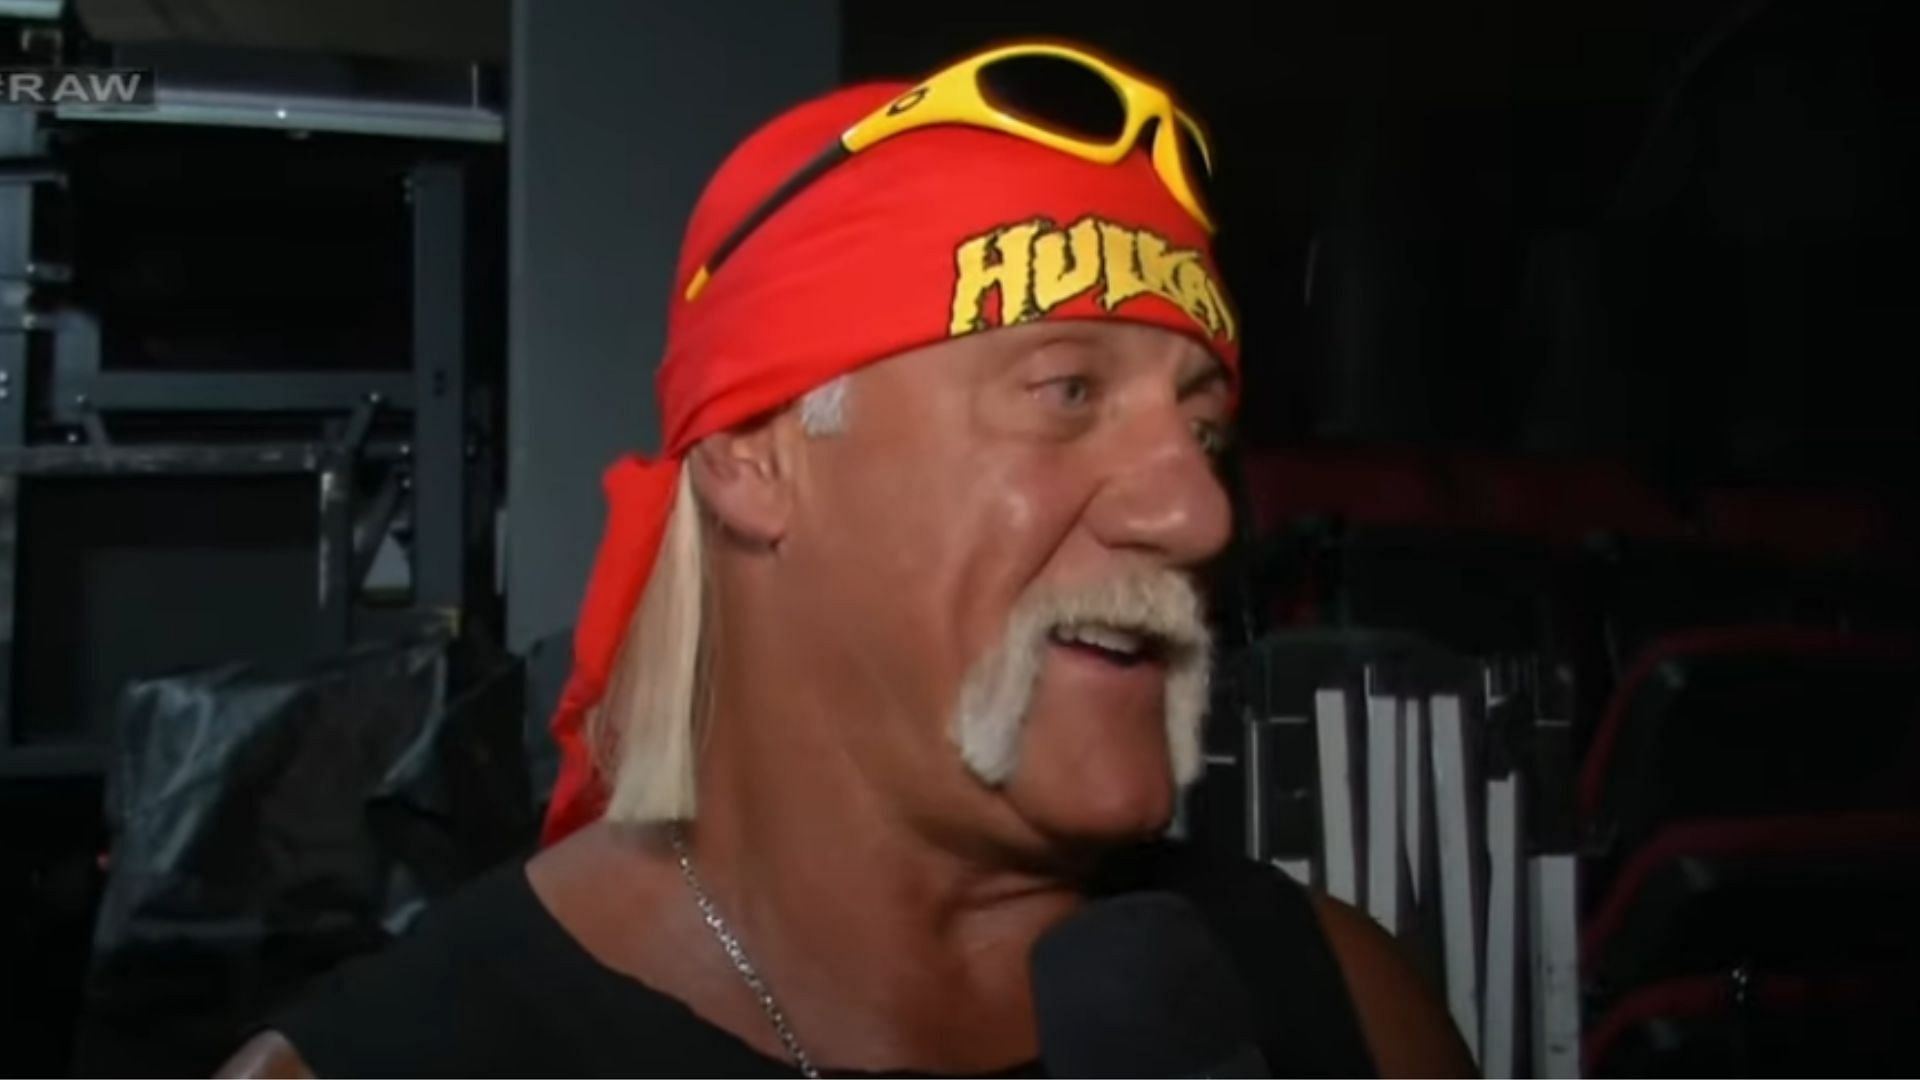 Hulk Hogan was WWE